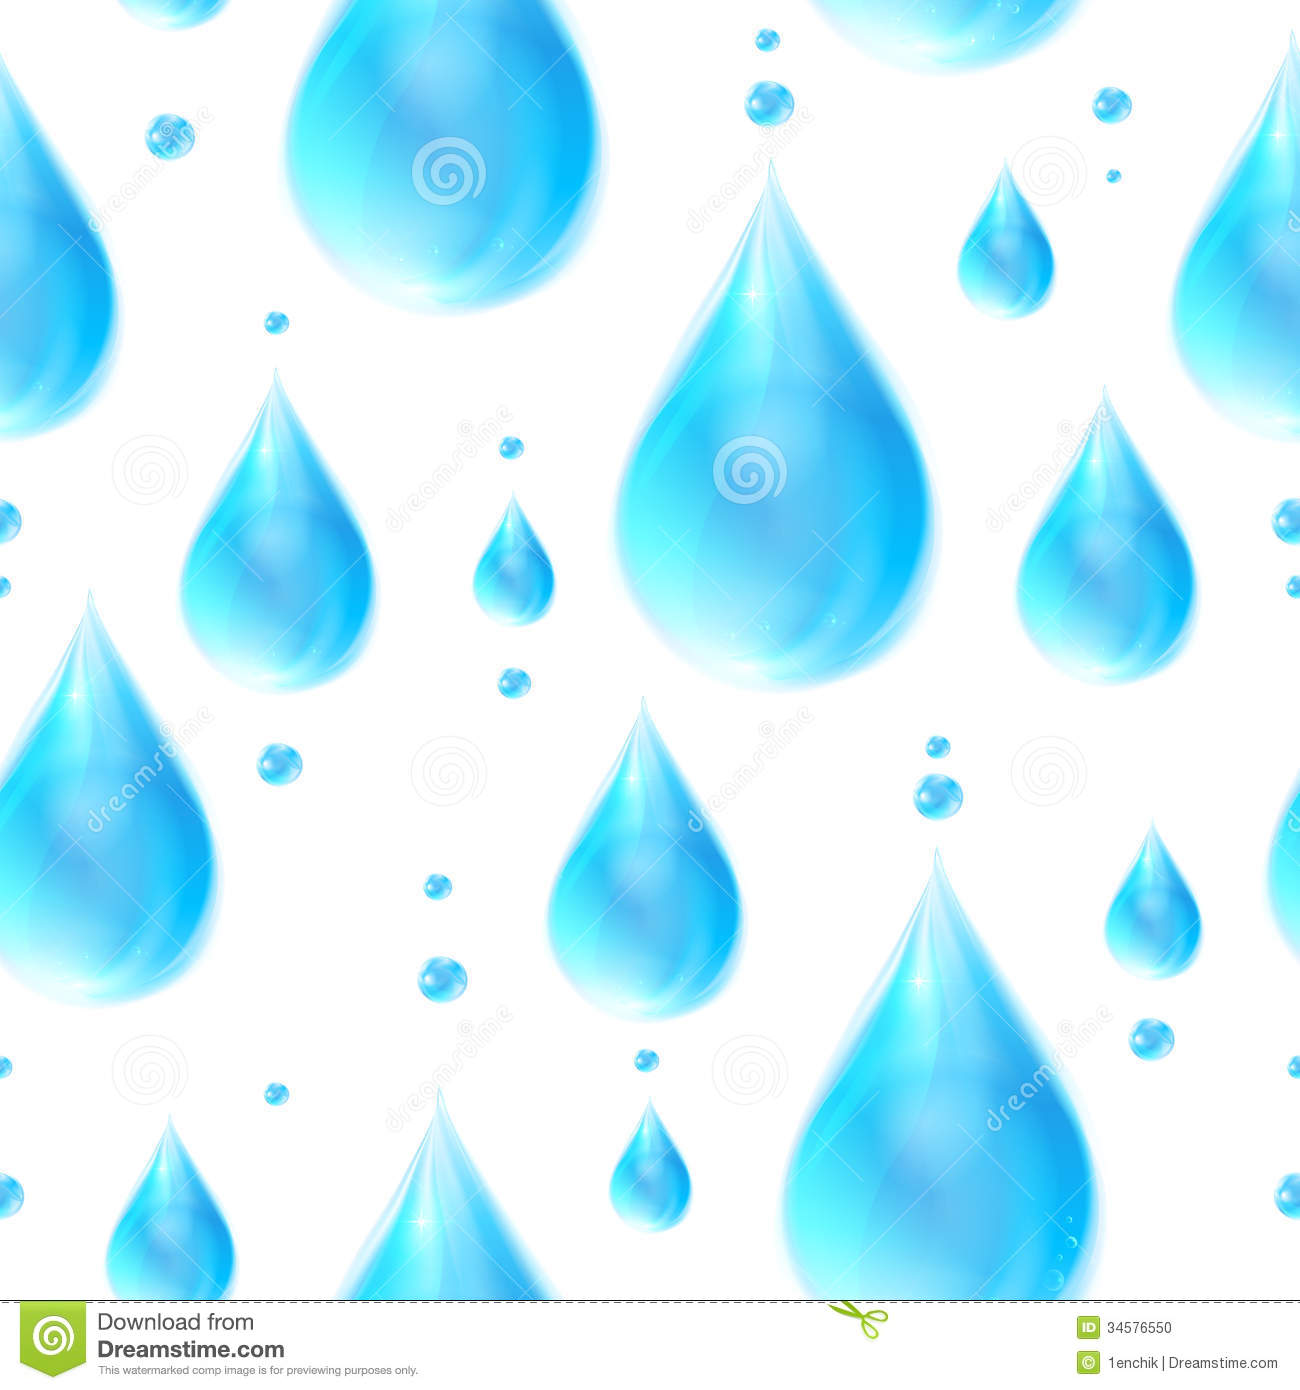 Realistic Raindrops Vector Seamless Pattern Stock Photo   Image    